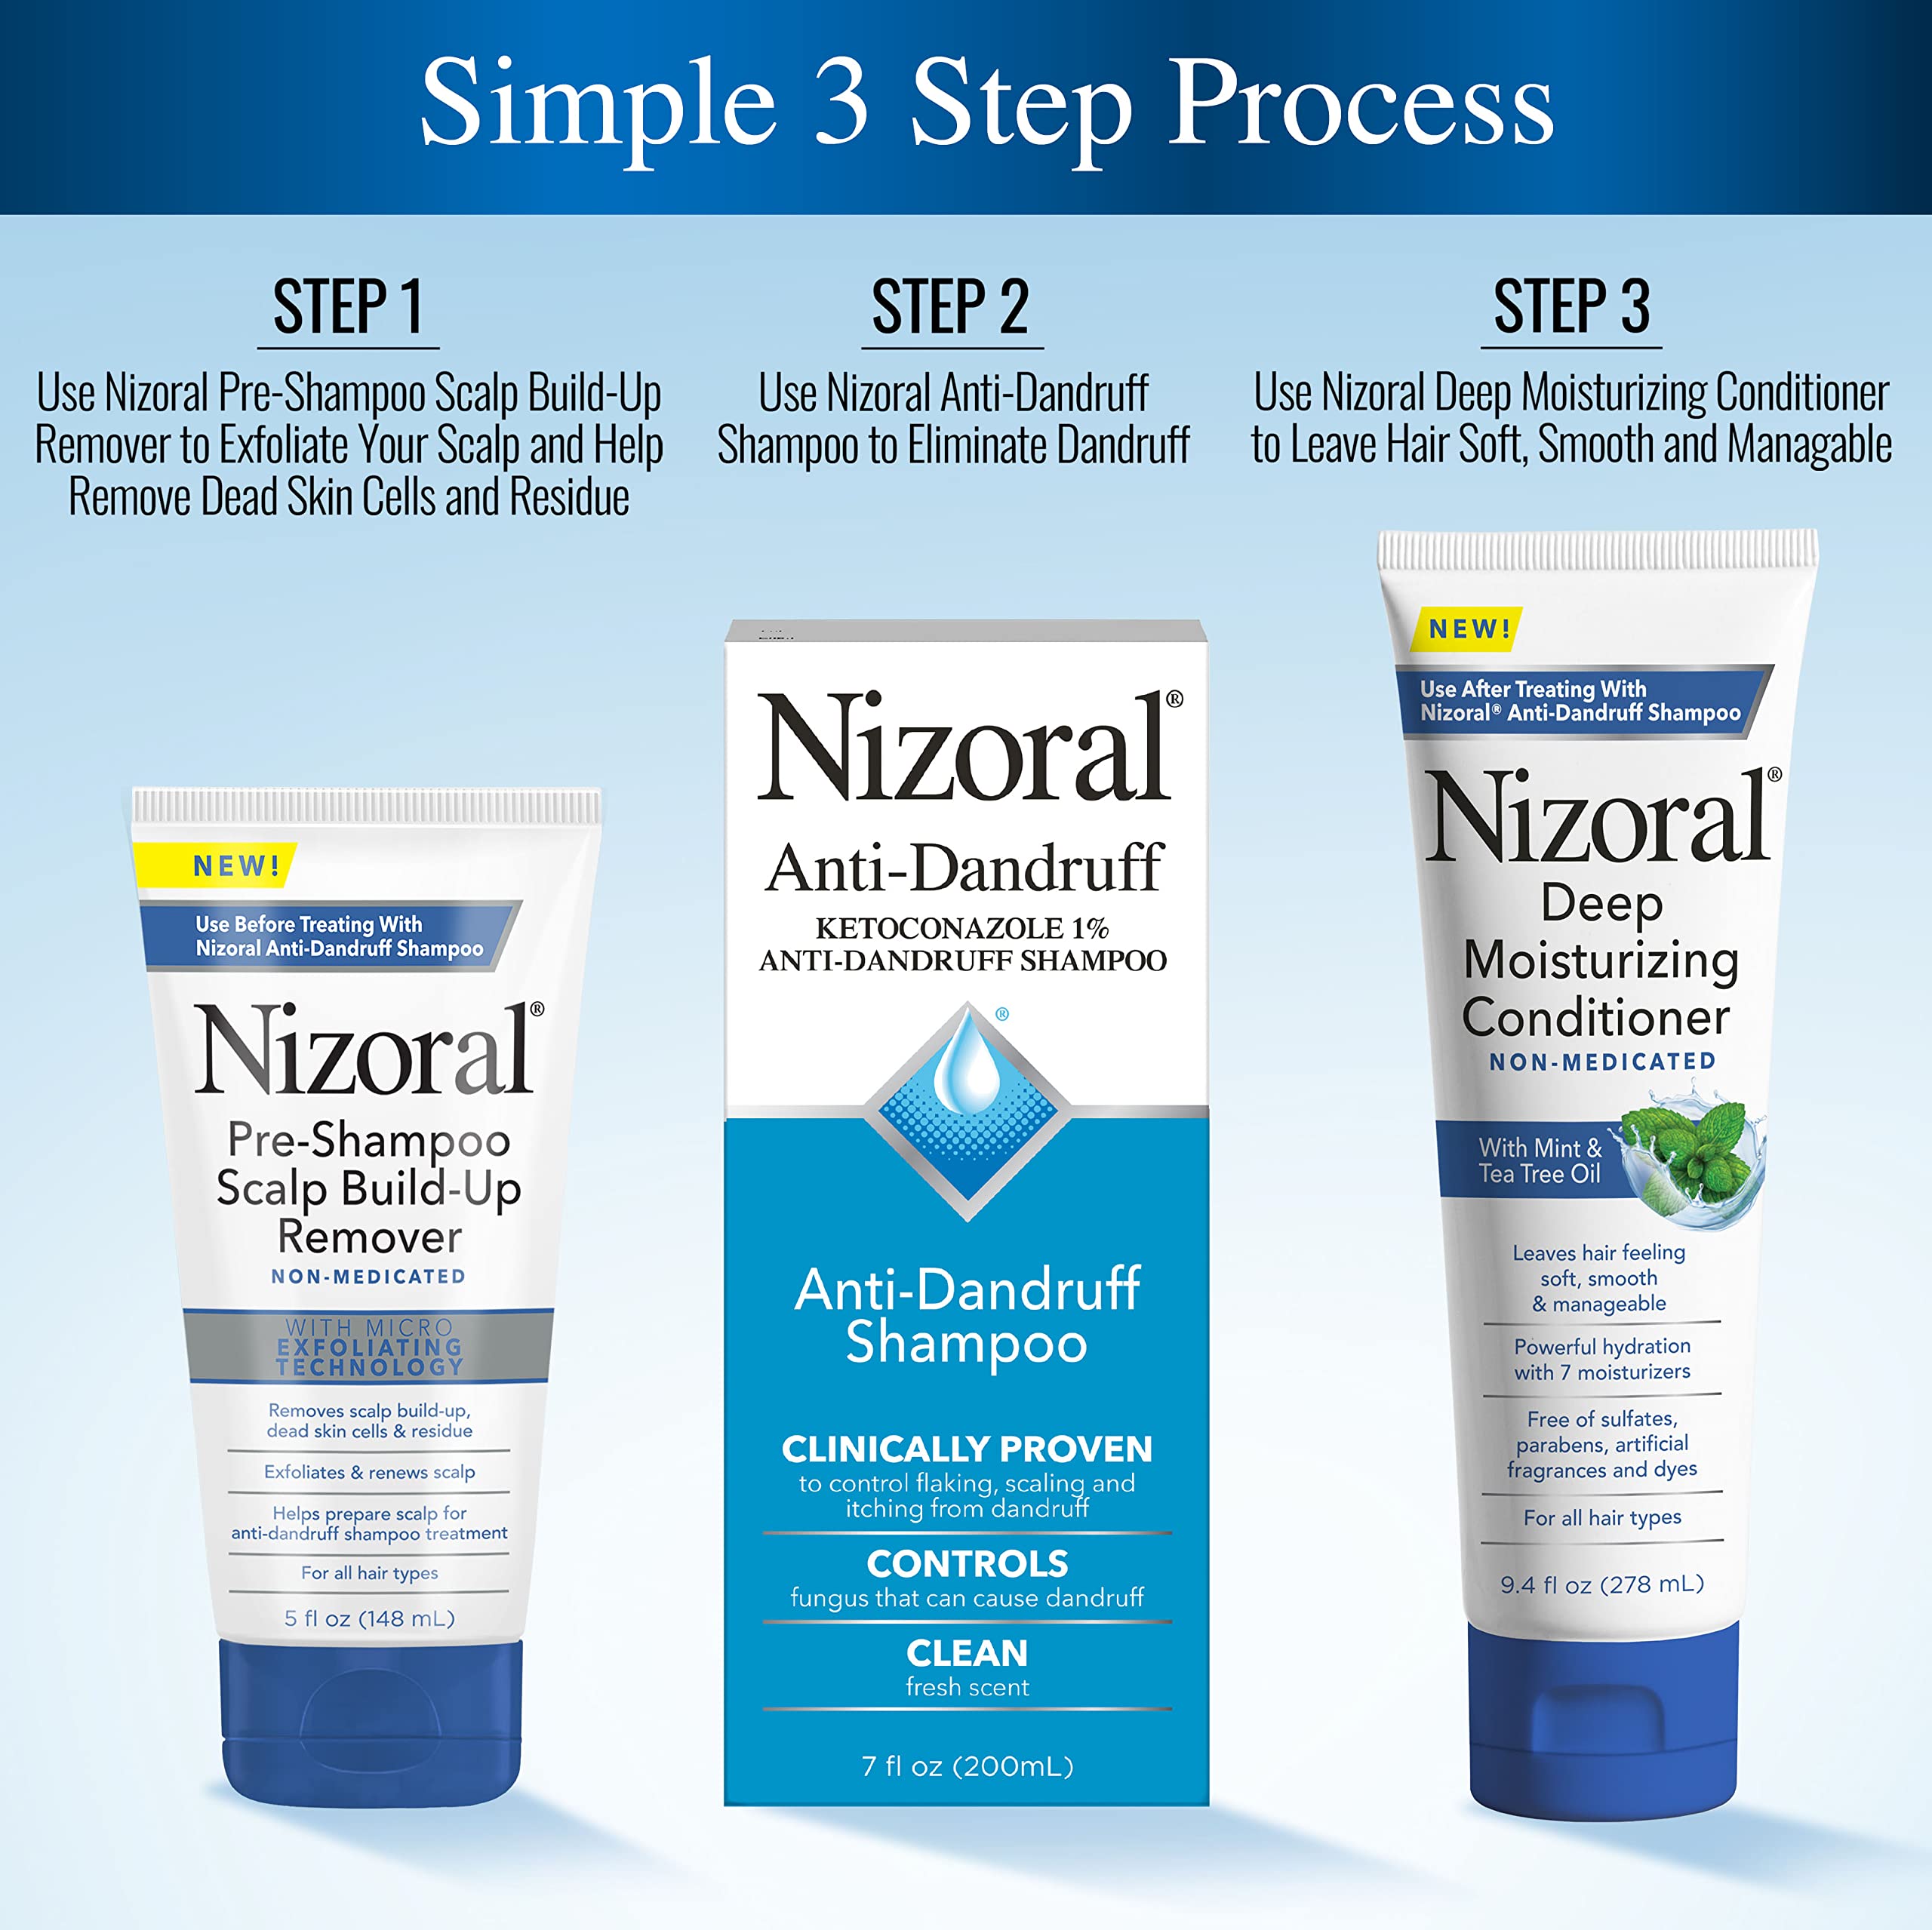 Nizoral Pre-Shampoo Scalp Build-Up Remover - Exfoliates and Renews Helps Prepare for Anti-Dandruff Shampoo Treatment, 5 oz